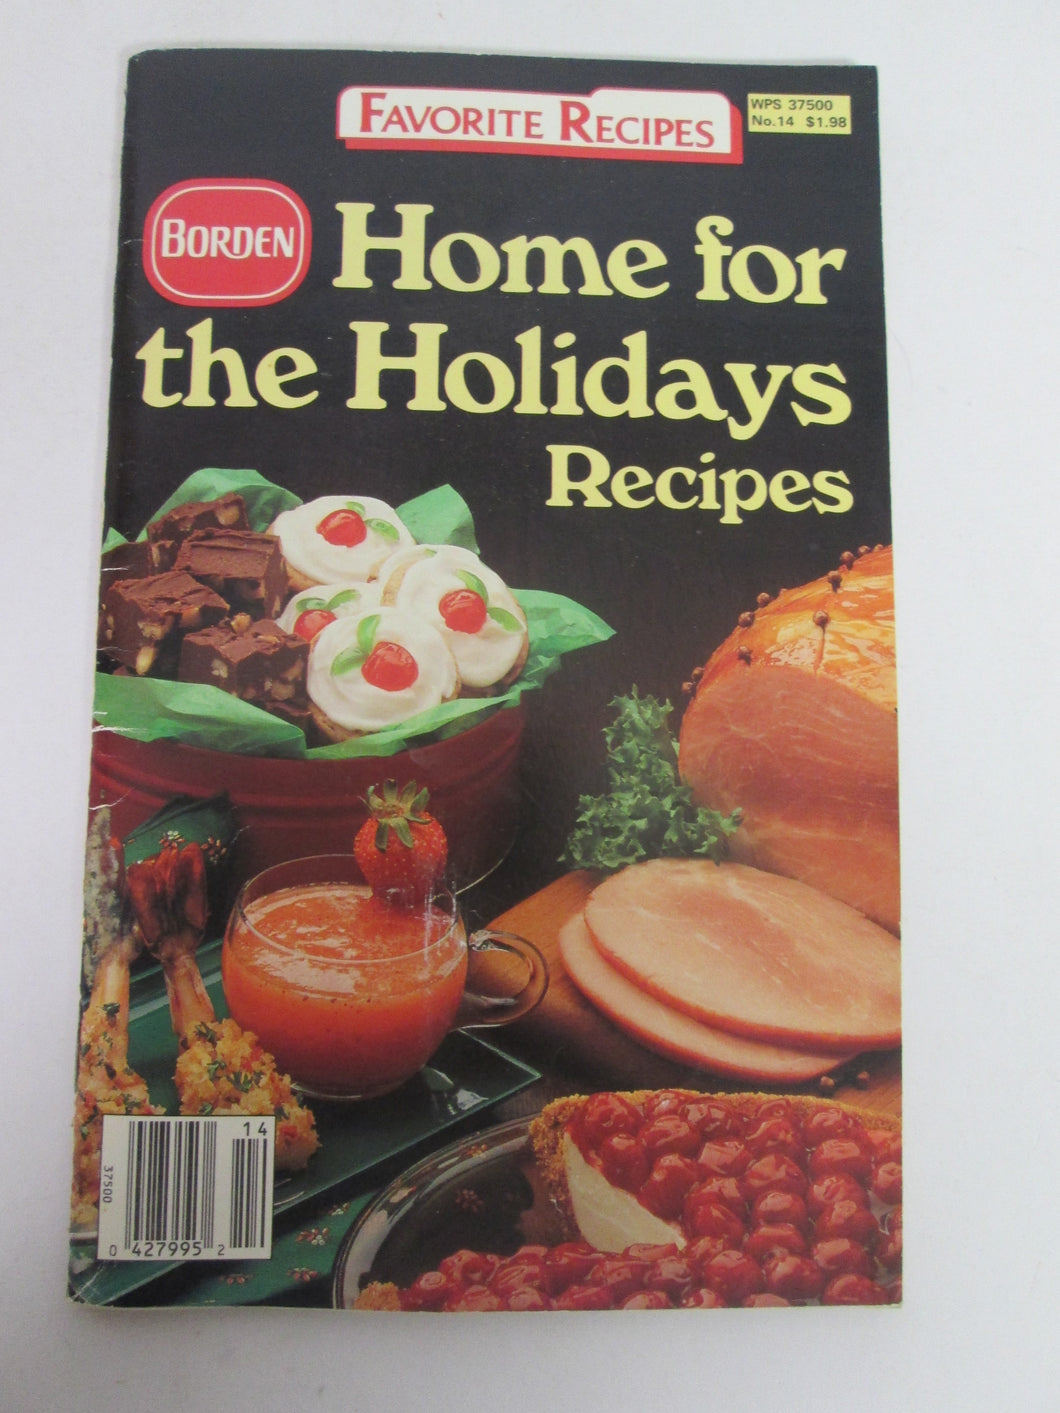 Bordon Home For The Holidays Recipes PB 1986